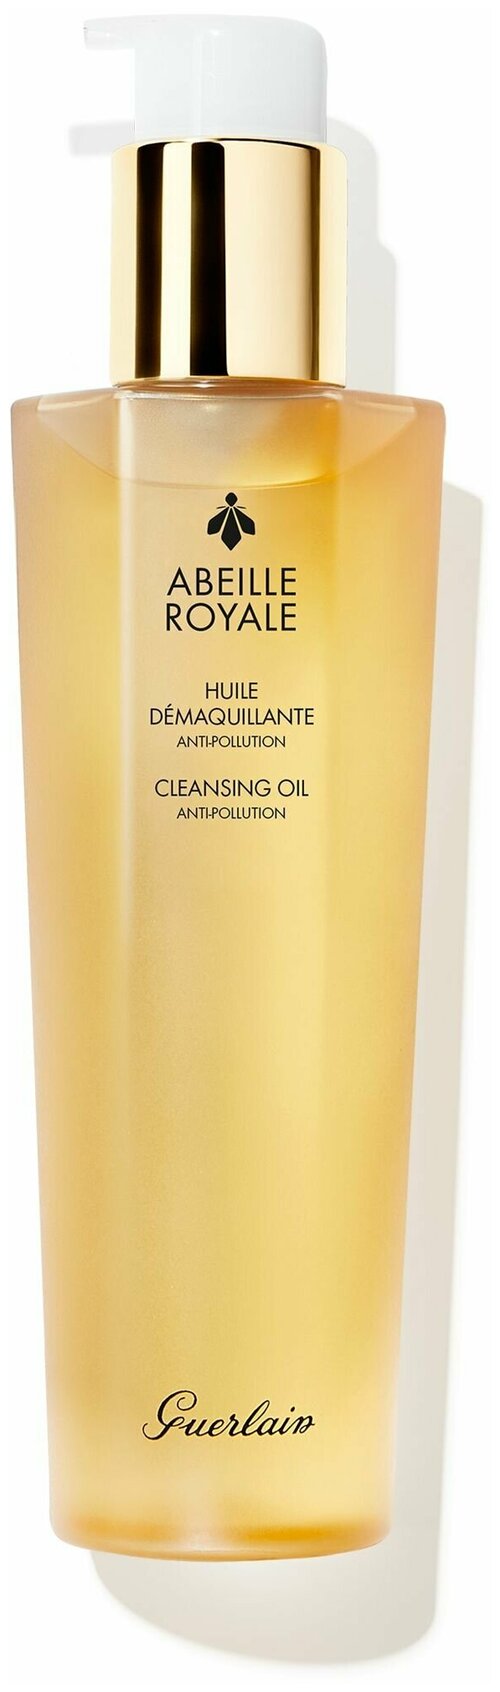 GUERLAIN Очищающее масло для лица и области глаз Abeille Royale Cleansing Oil